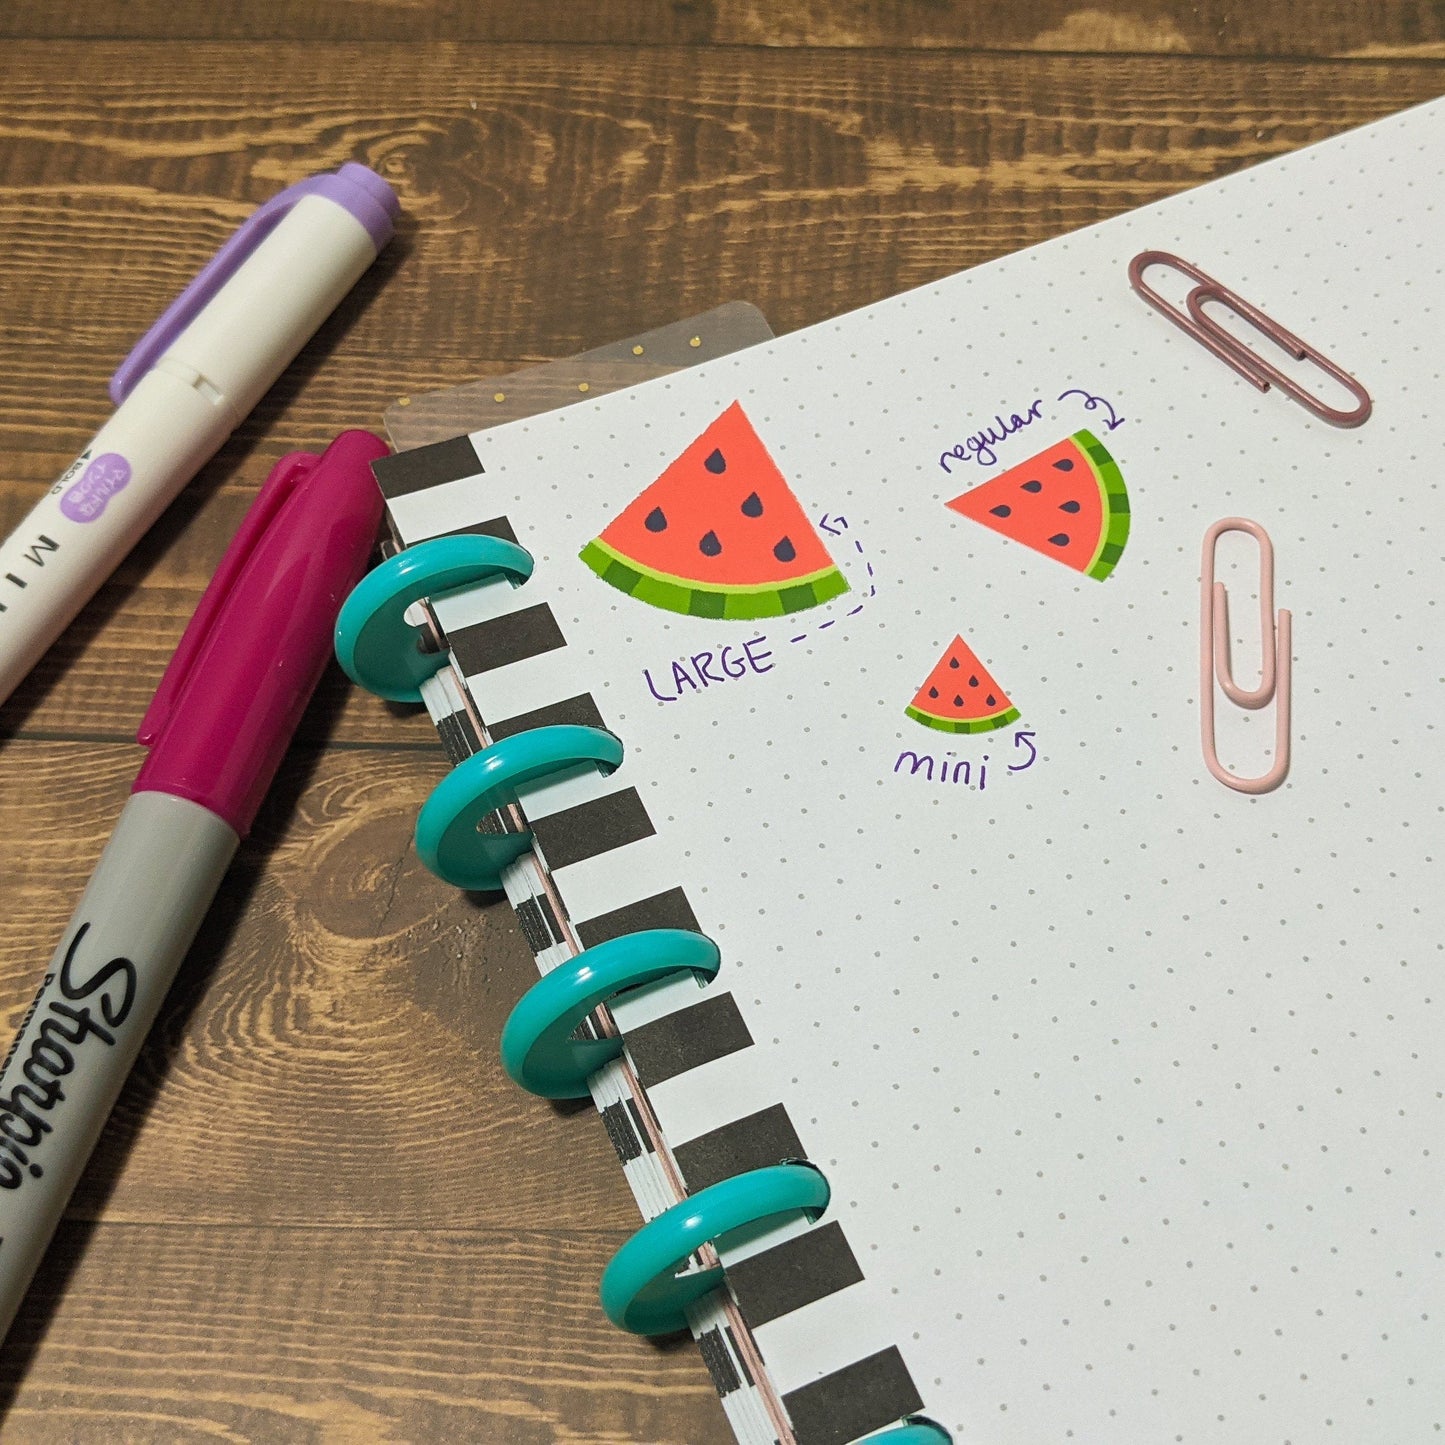 Summertime Snacks Emoji Sticker Sheet